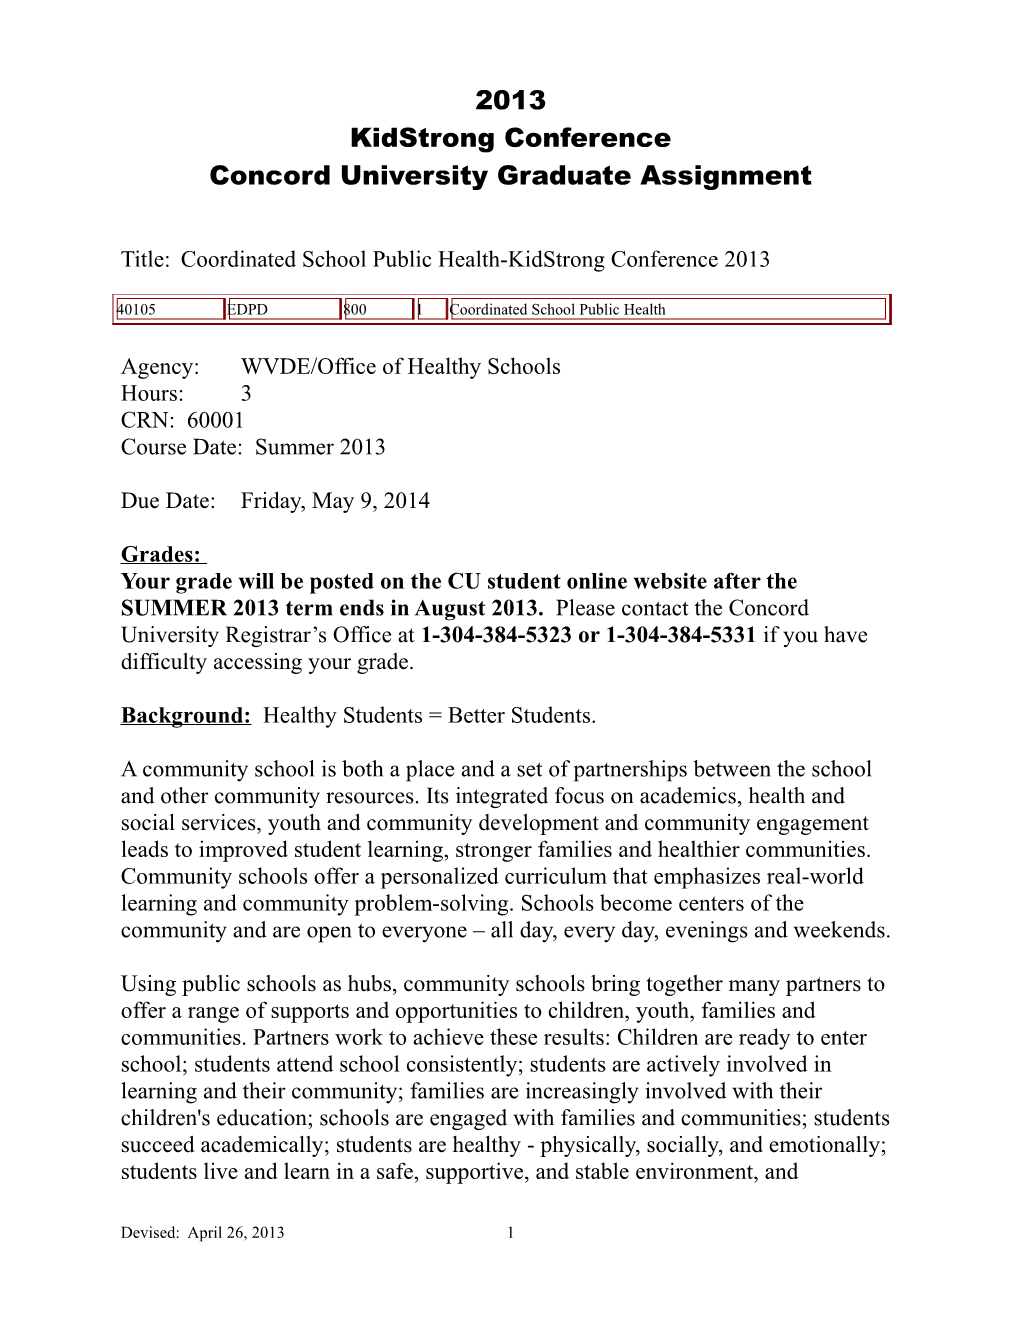 Concord University Graduate Assignment